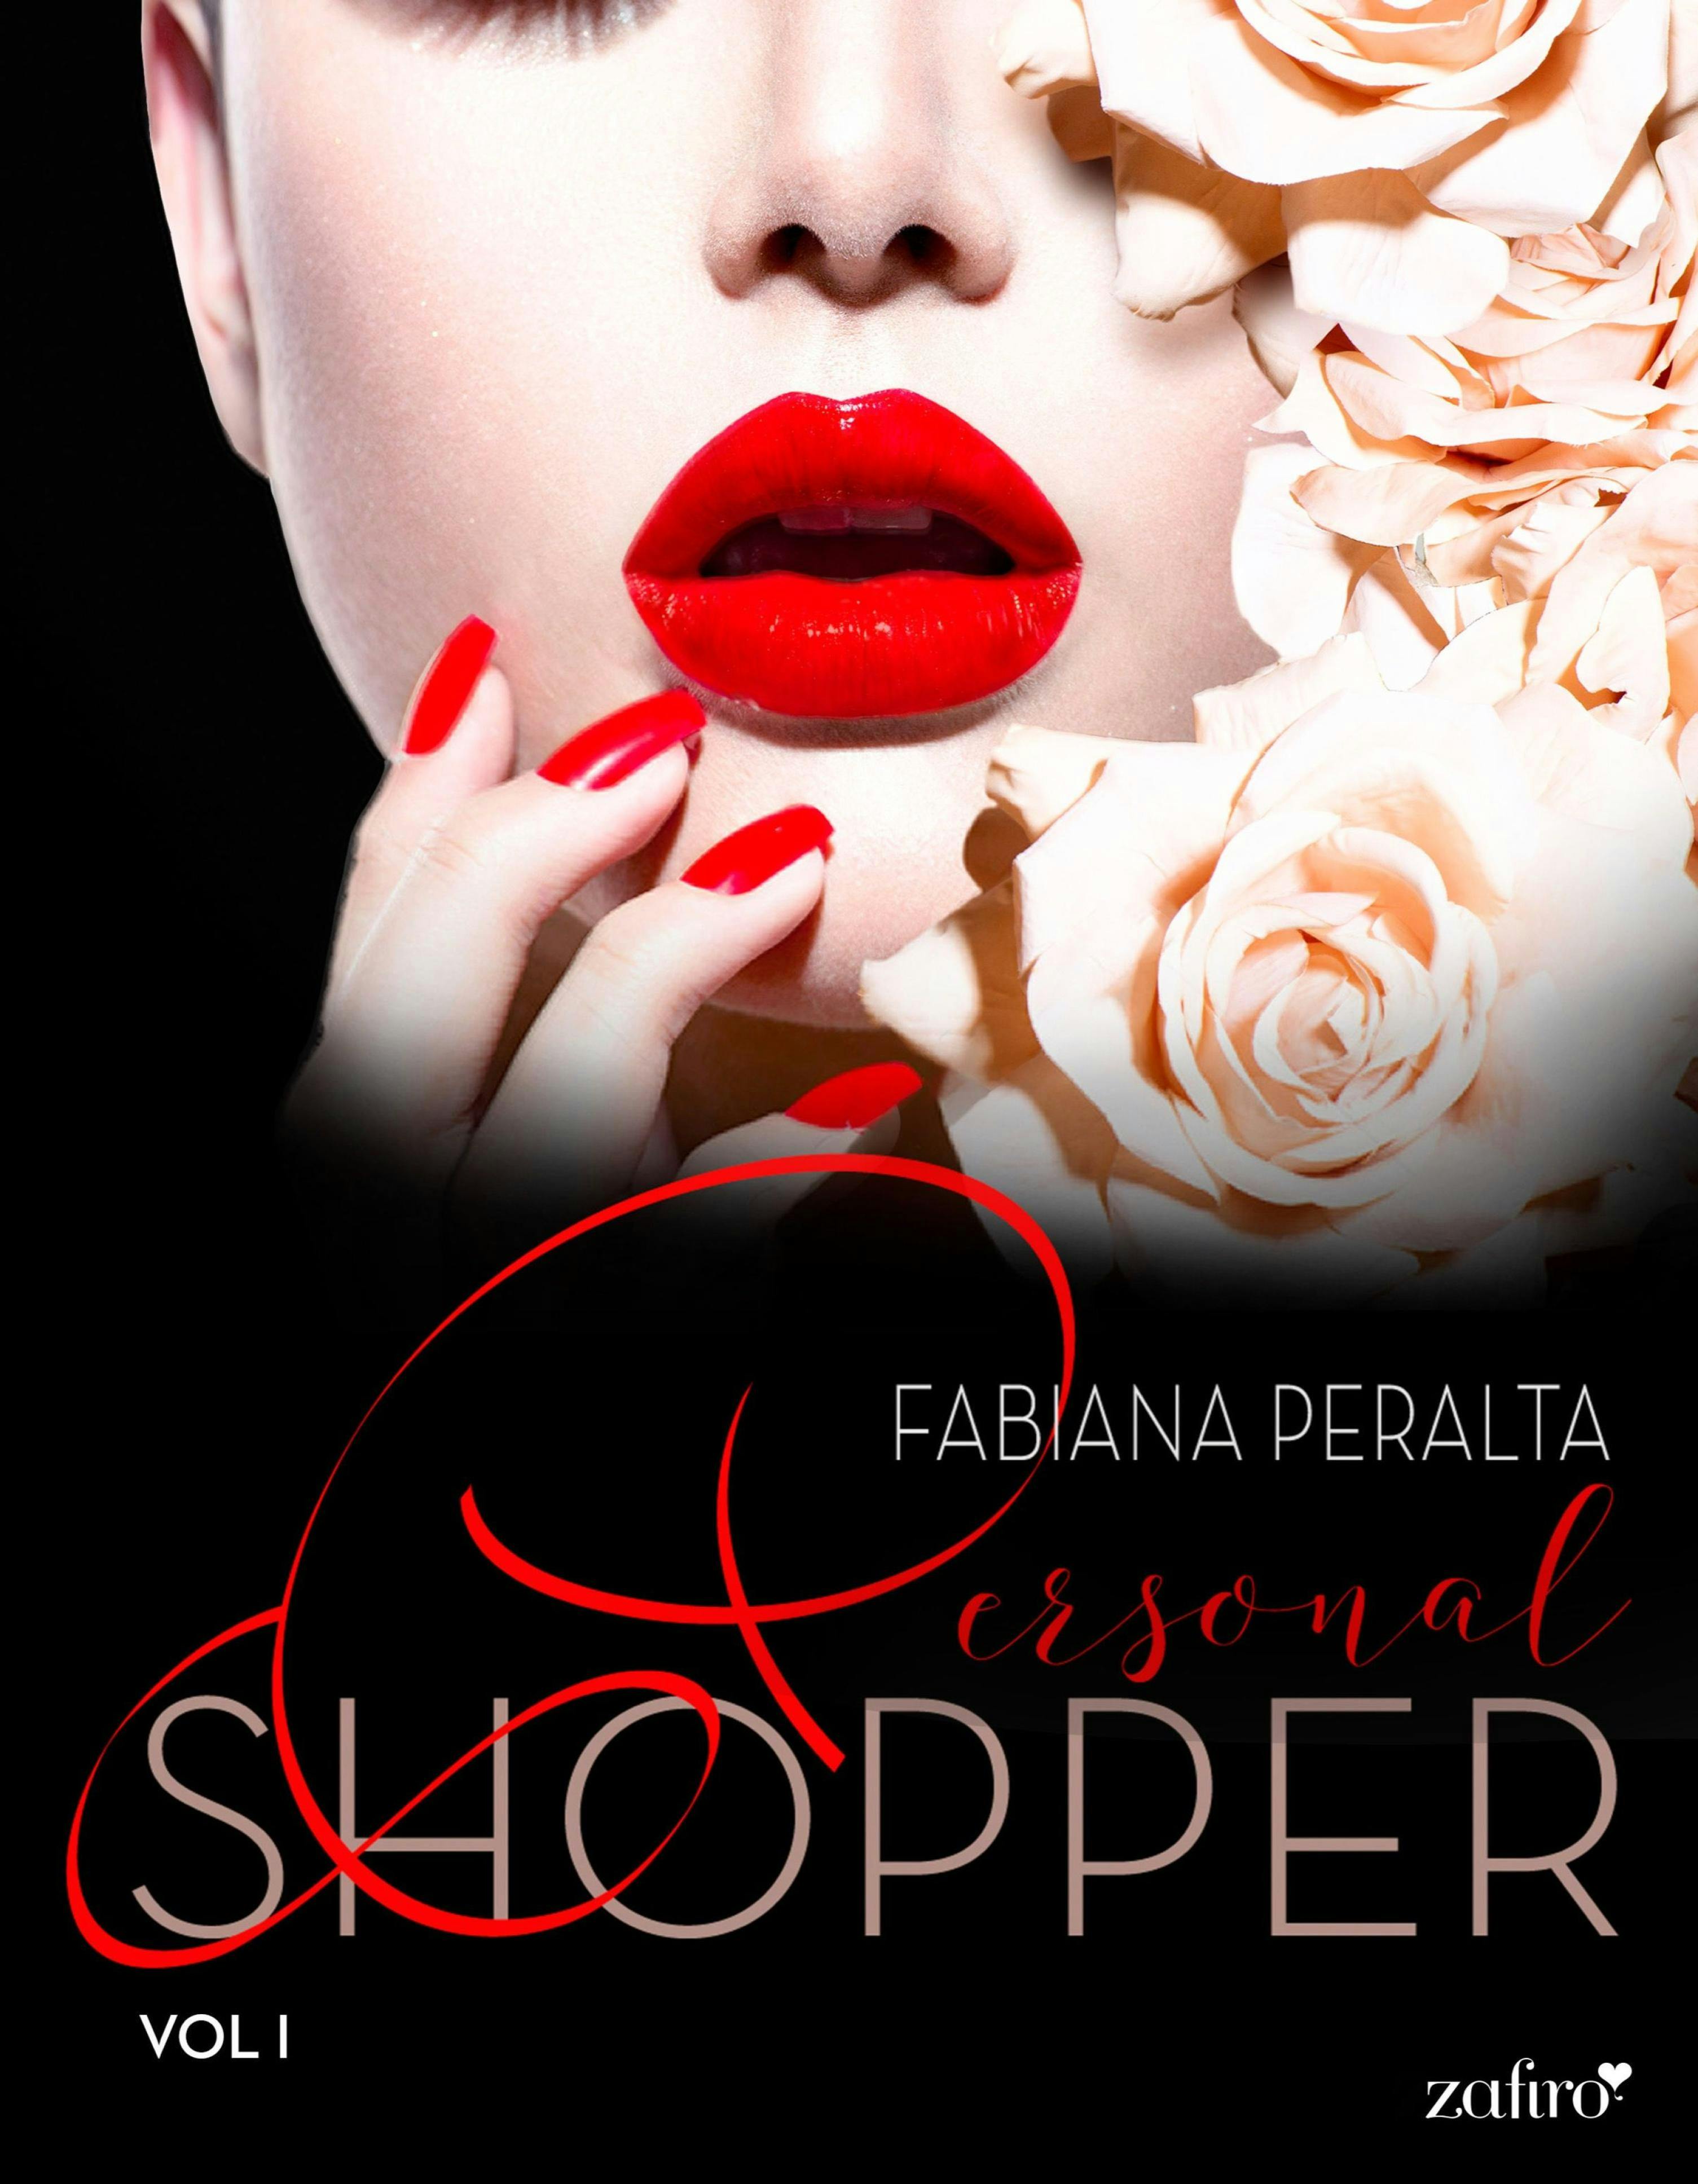 Personal shopper, vol. 1 - Fabiana Peralta